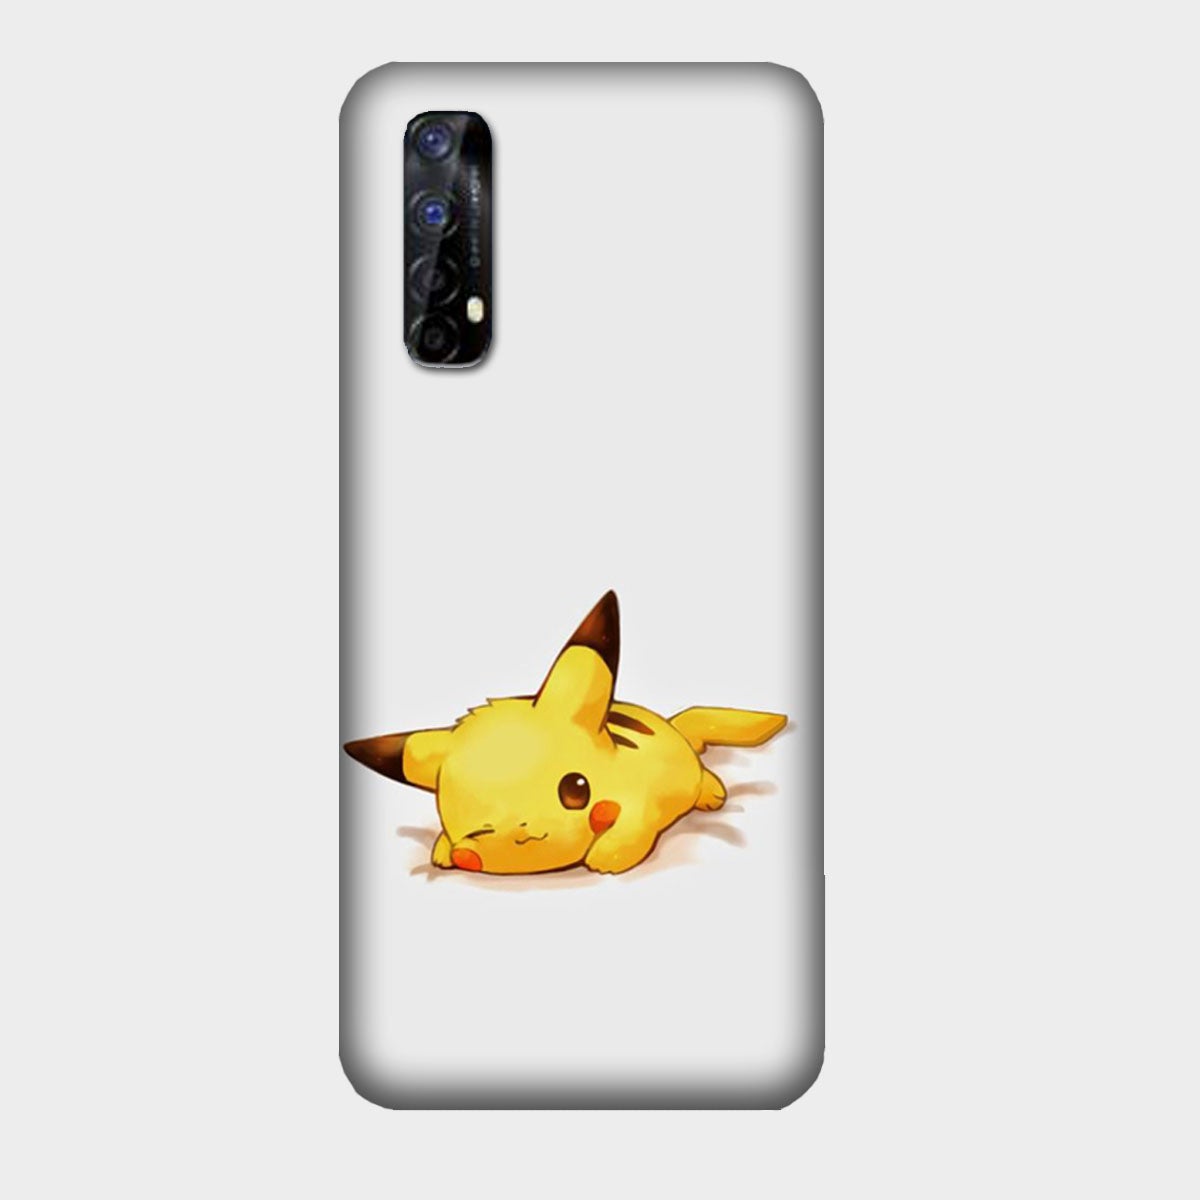 Pikachu - Pokemon - Mobile Phone Cover - Hard Case